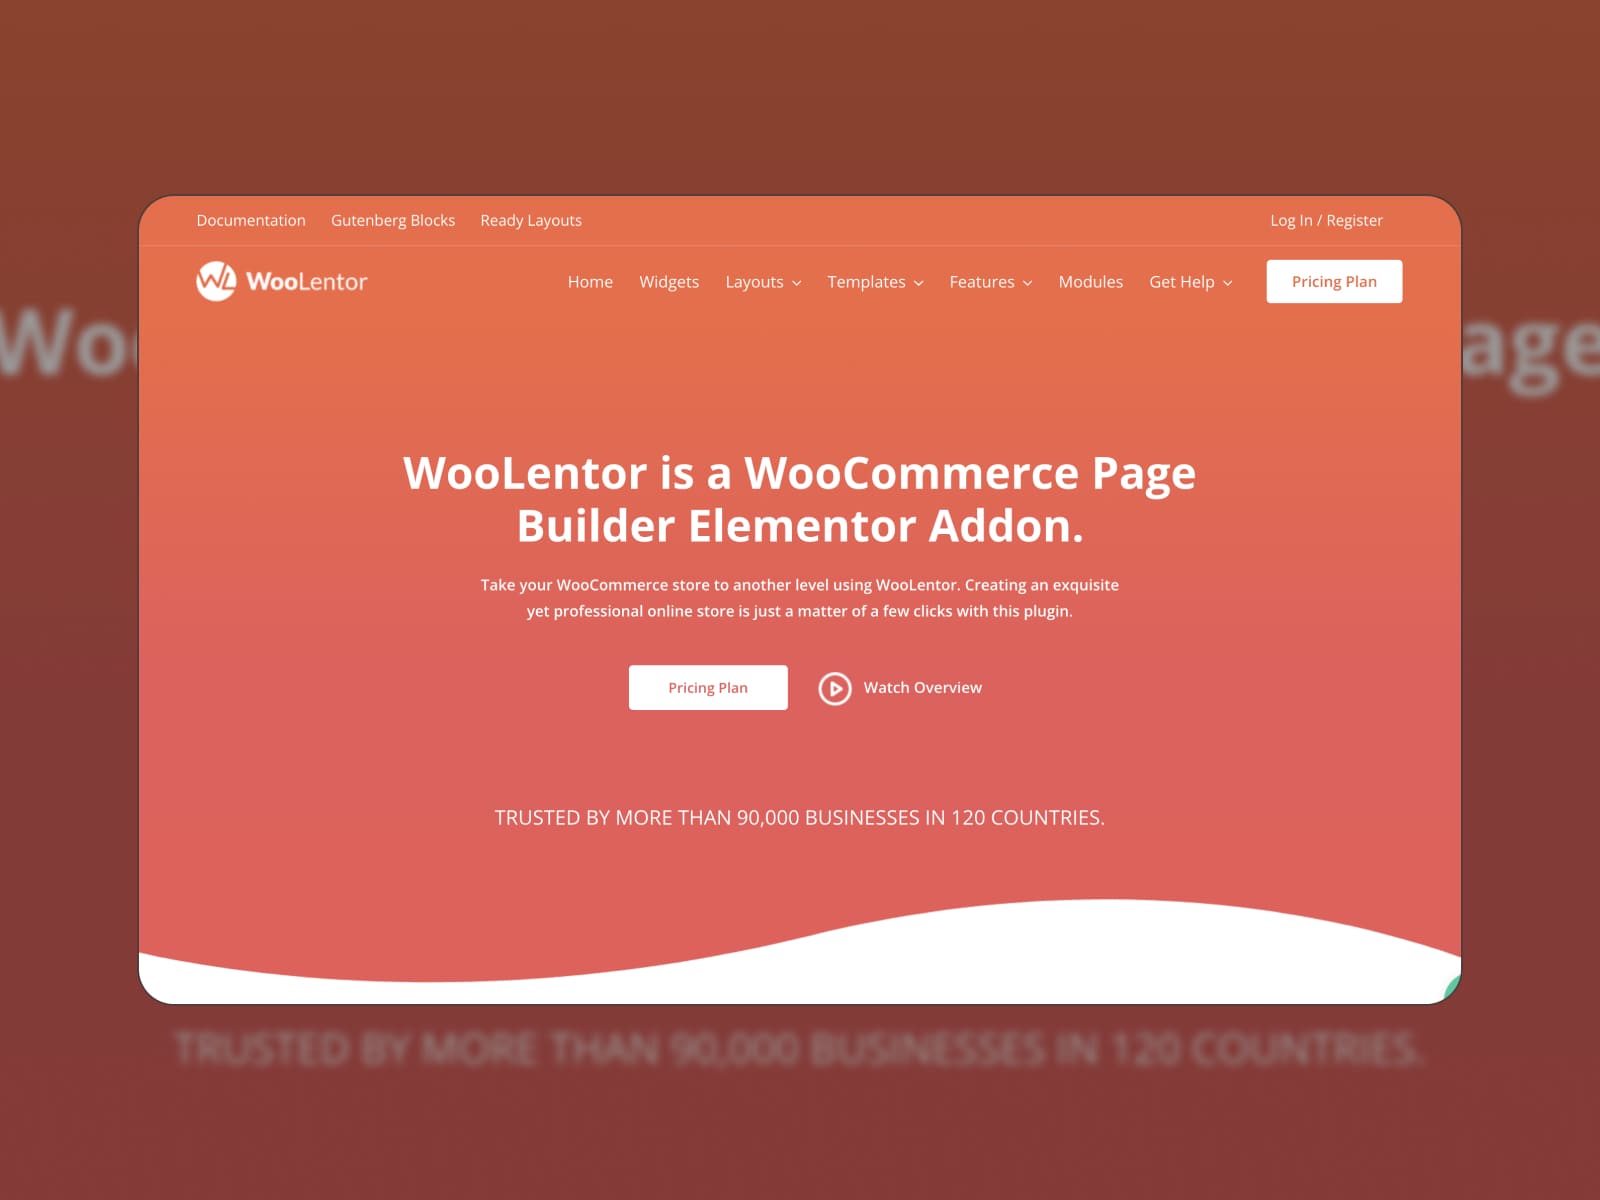 The WooLentor landing page for WooCommerce Elementor widgets.